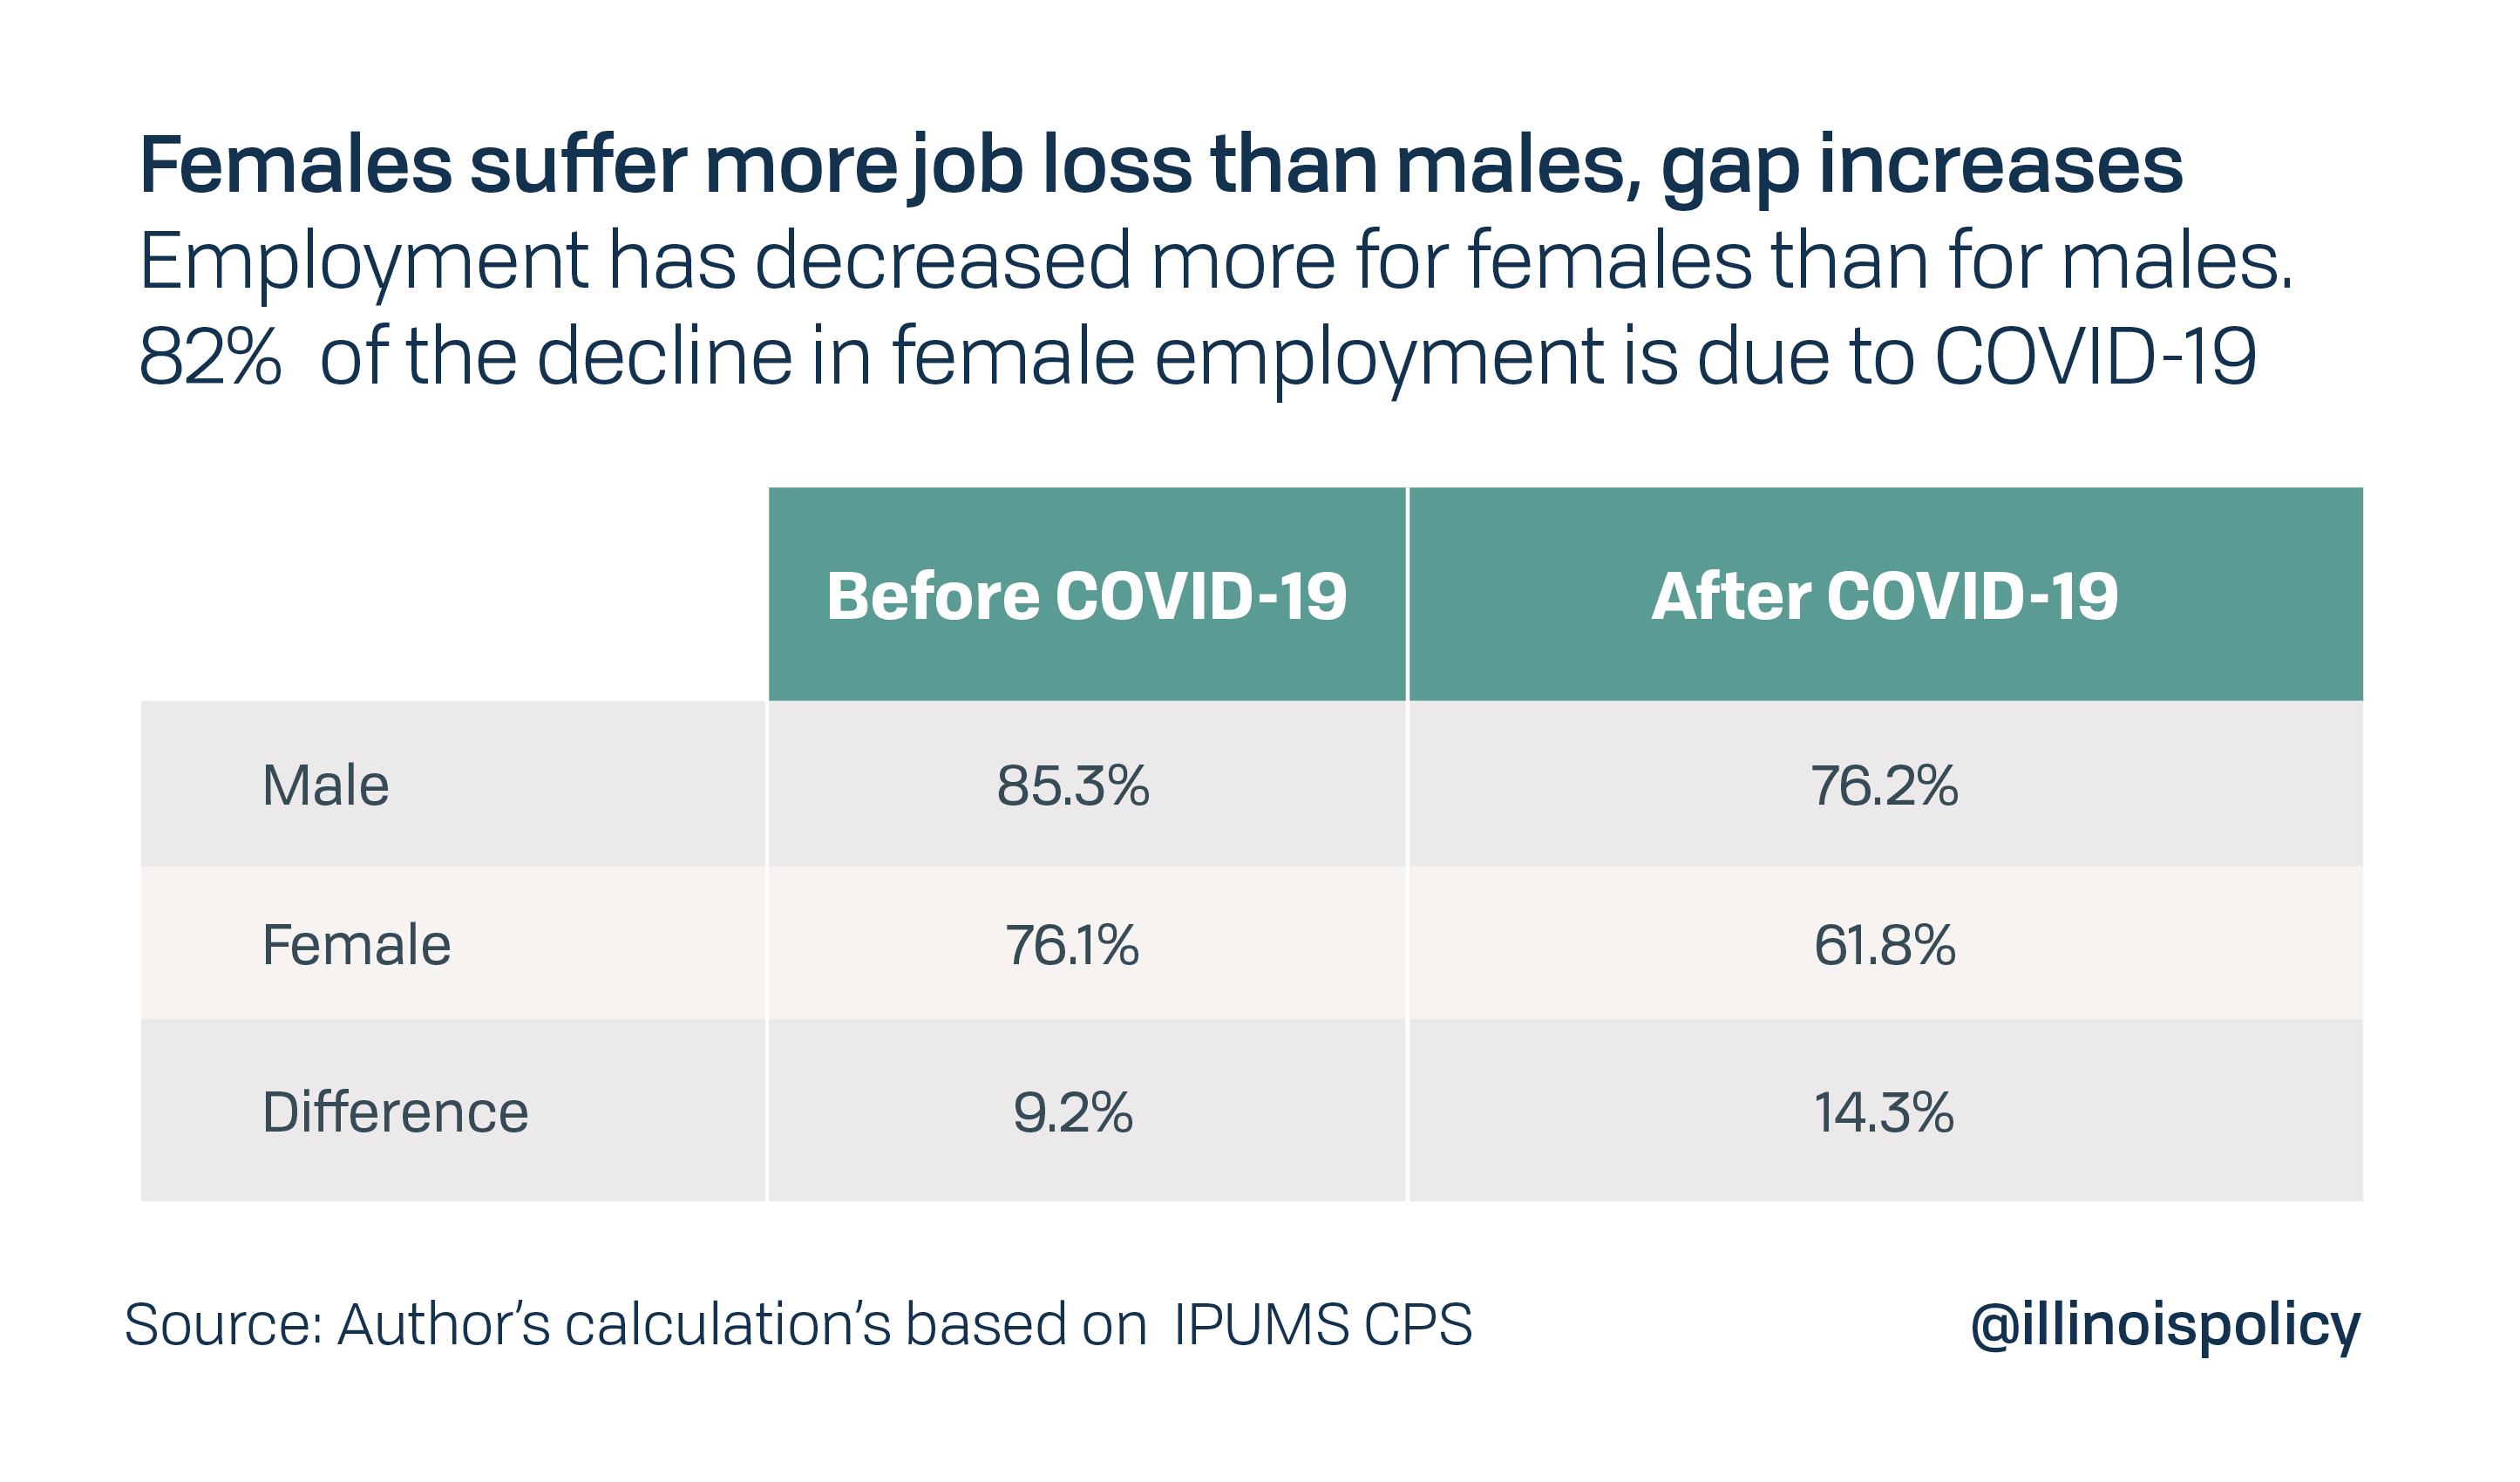 Females suffer more job losses than males, gap increases